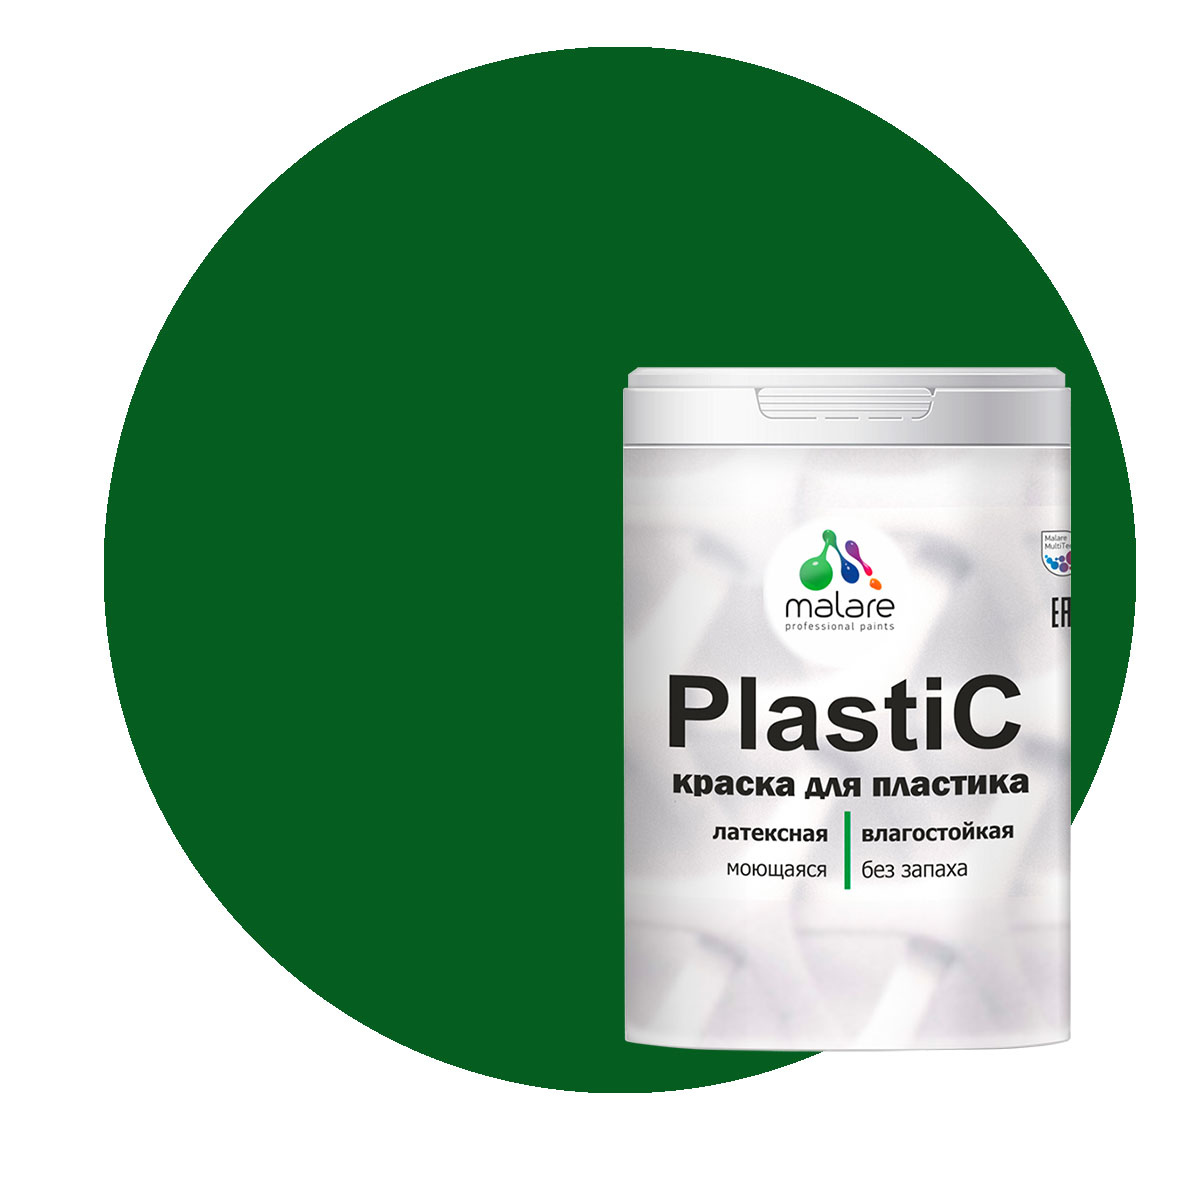 Краска Malare PlastiC для пластика, ПВХ, для сайдинга, зеленый мичиган, 2 кг. краска для пластика сайдинга пвх malare